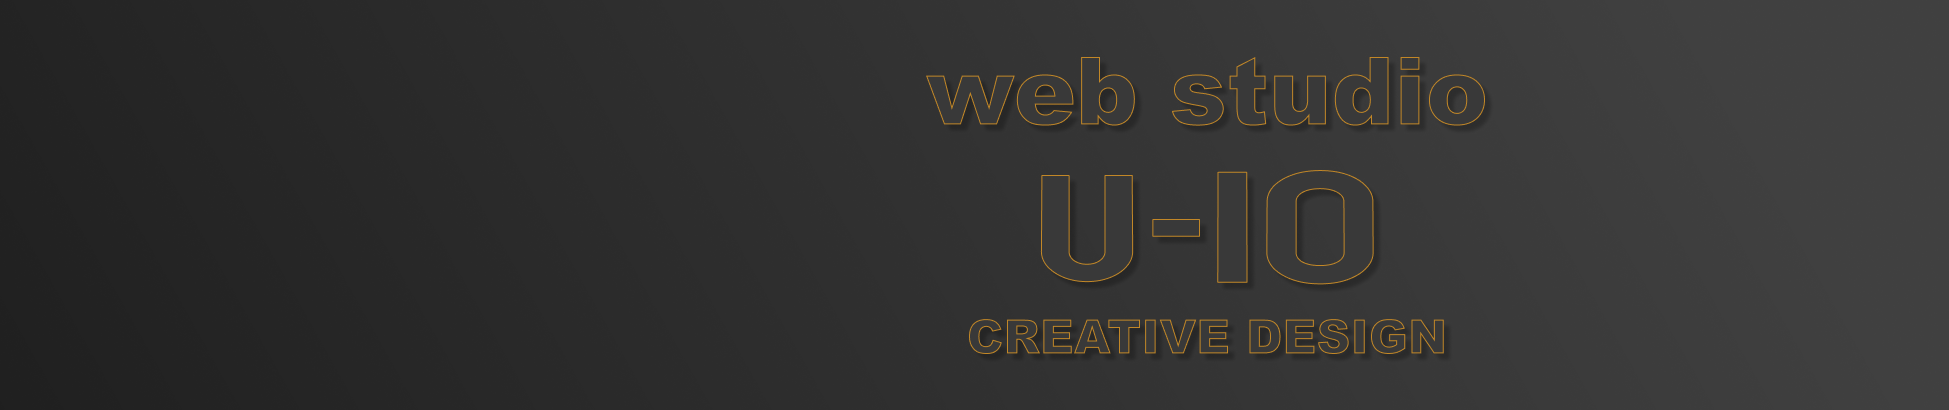 Web-студия U-10's profile banner